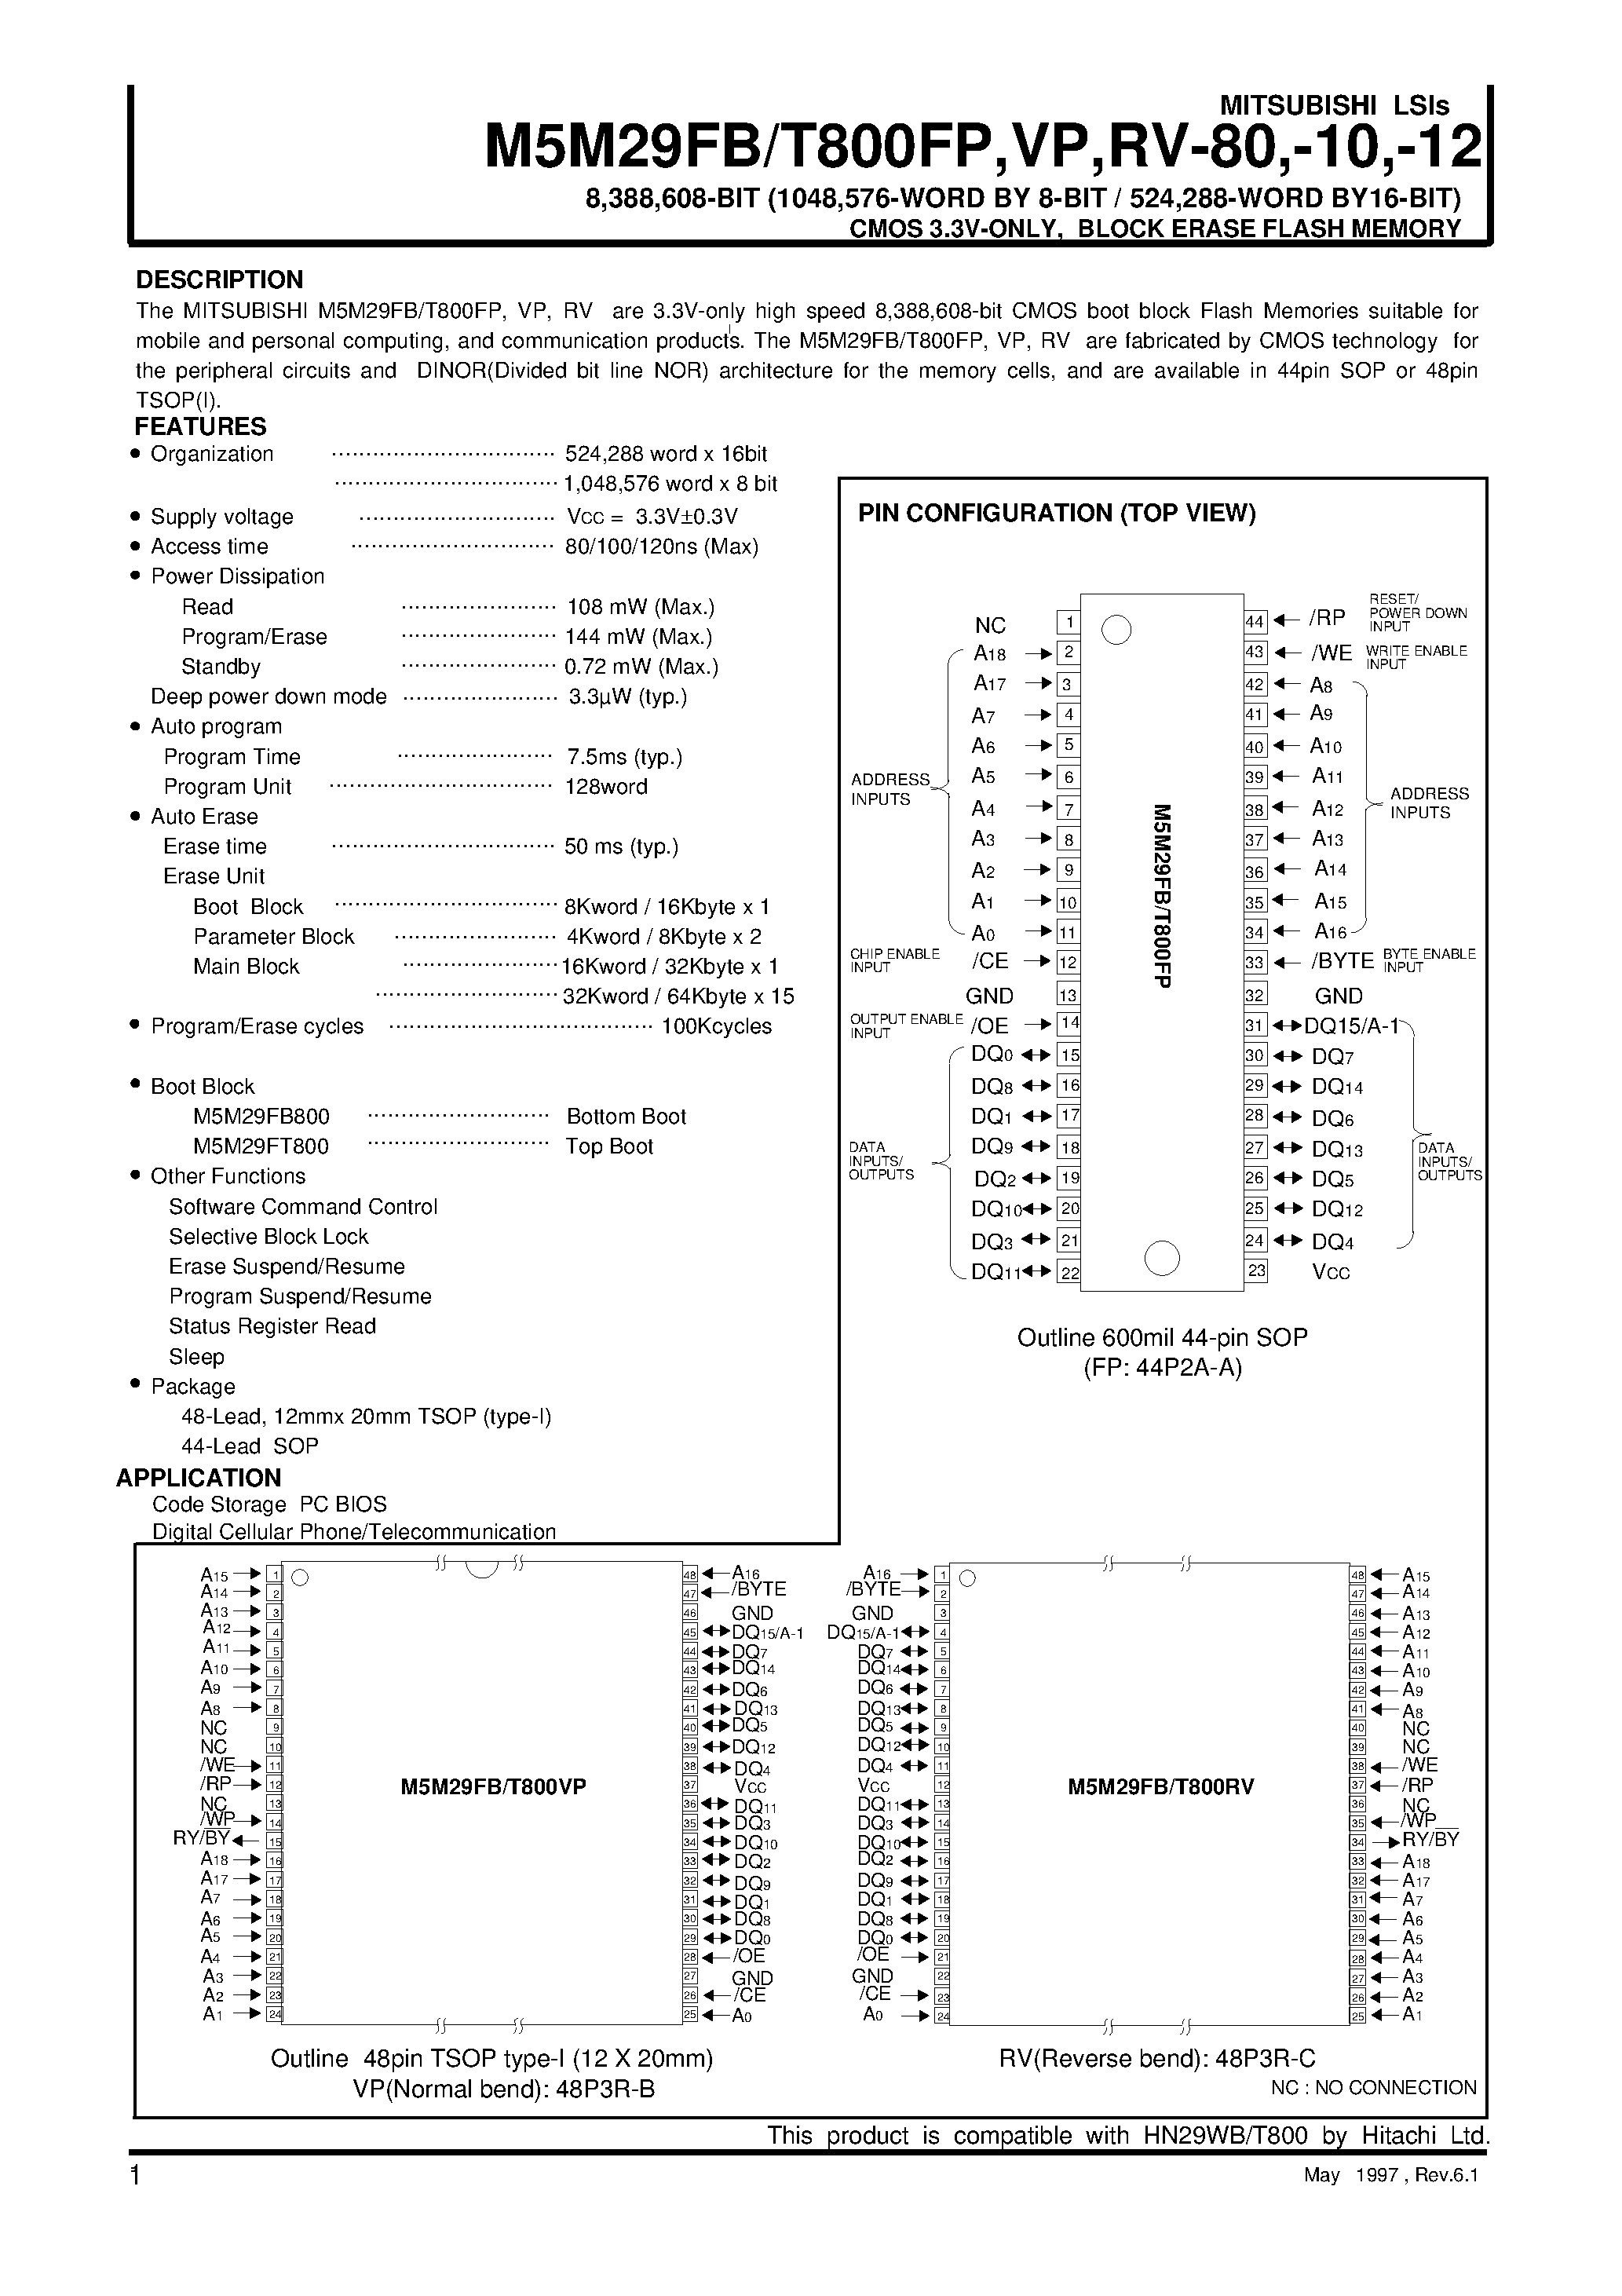 Datasheet M5M29FB800RV-12 - 8 /388 /608-BIT (1048 /576-576-WORD BY 8-BIT / 524 /288-WORD BY16-BIT)CMOS 3.3V-ONLY / BLOCK ERASE FLASH MEMORY page 1